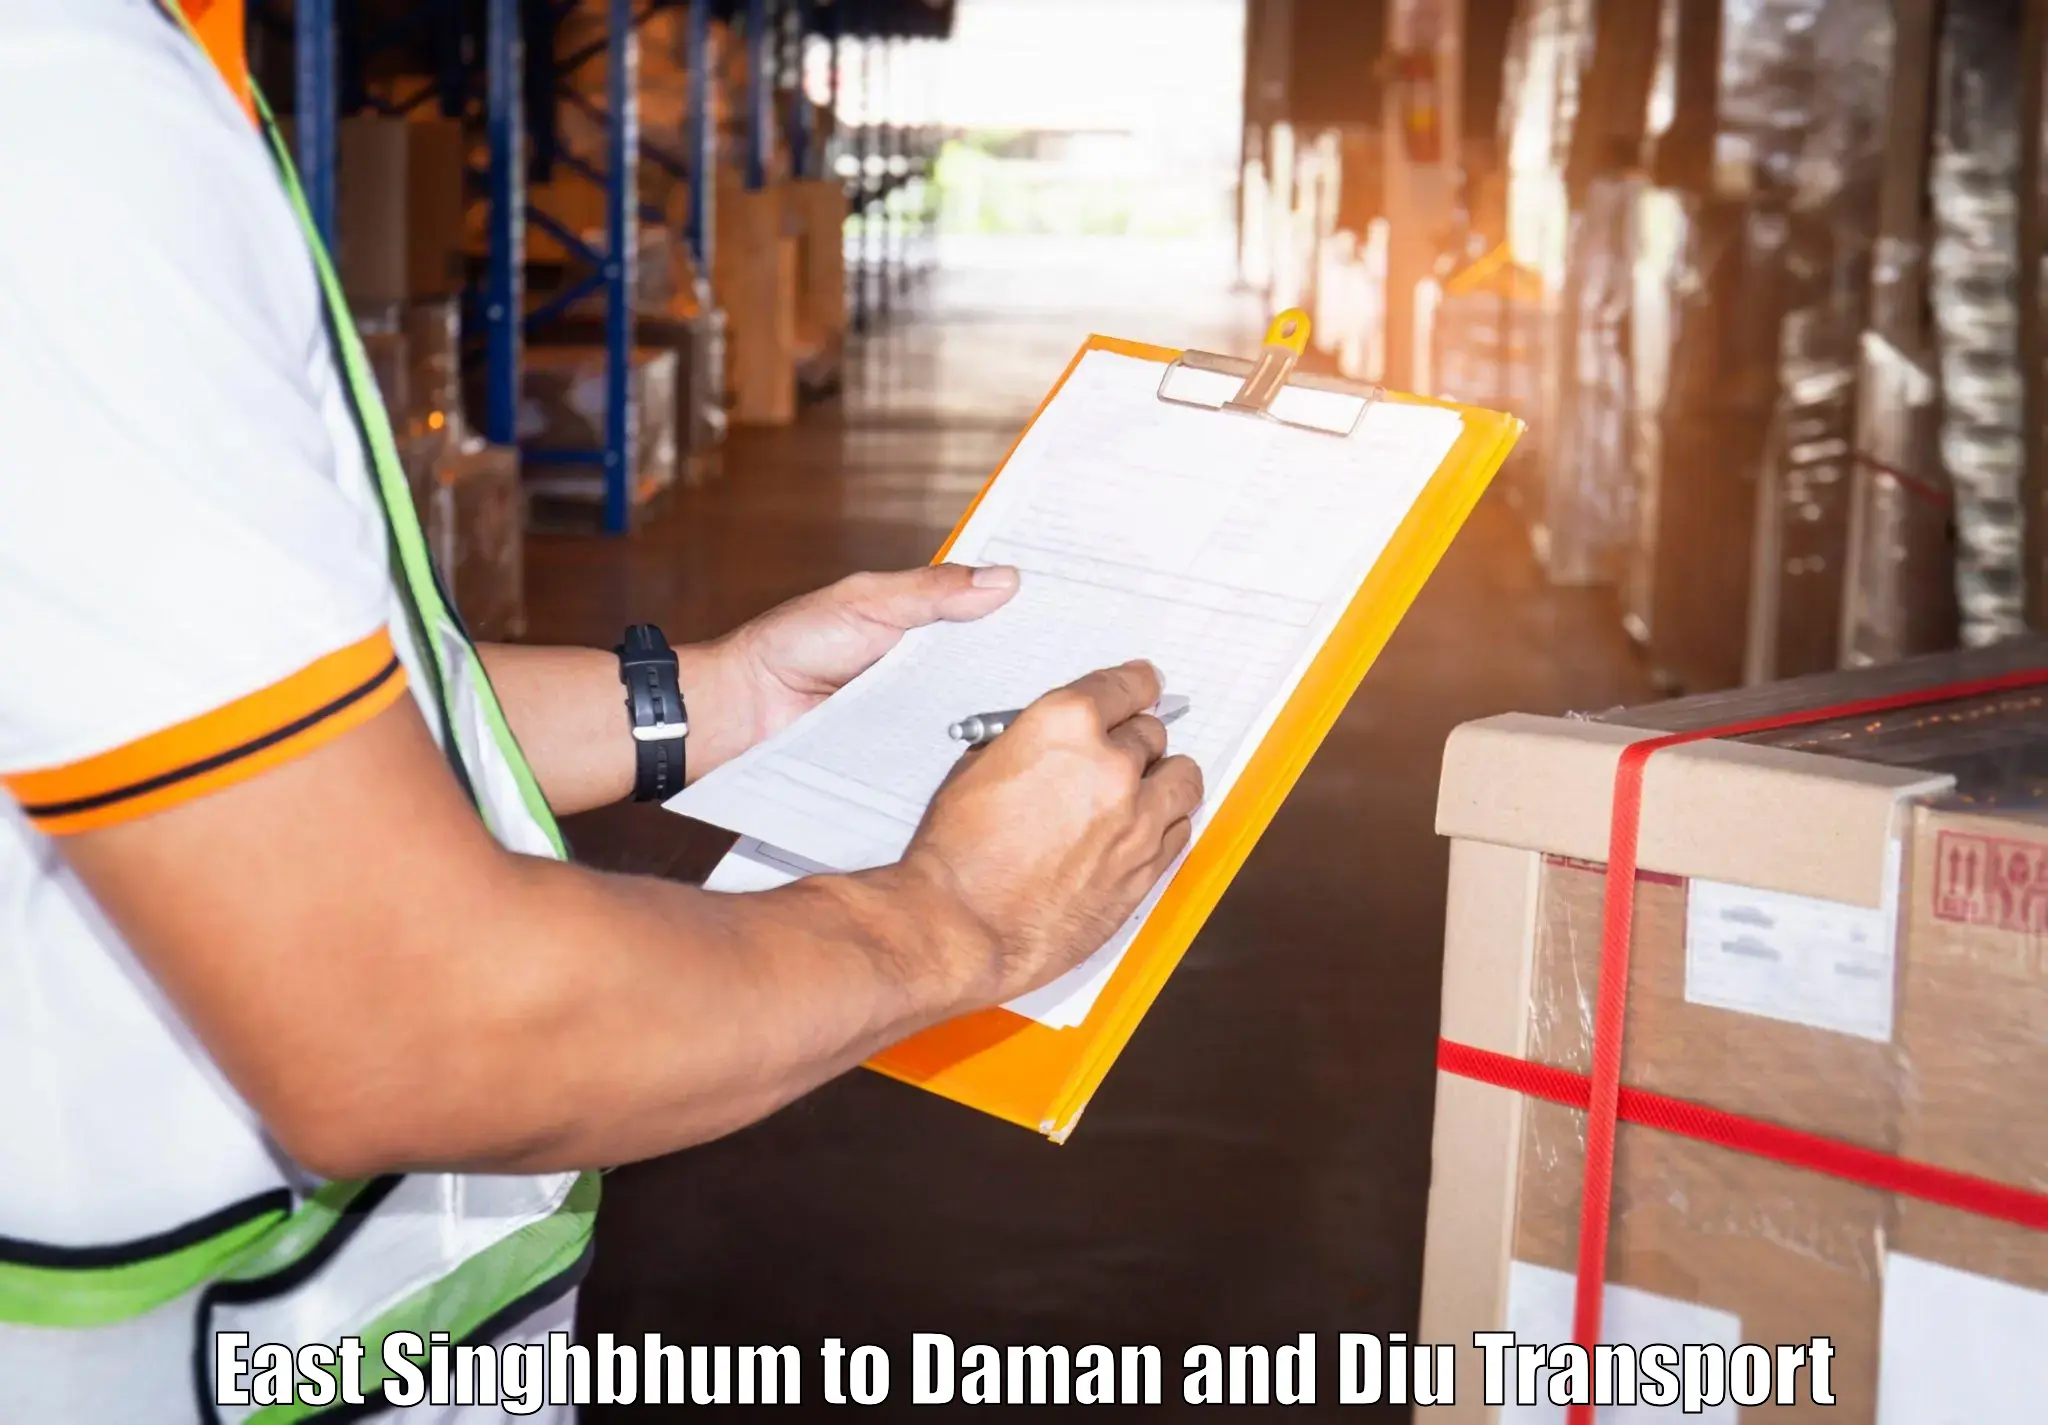 Shipping partner East Singhbhum to Daman and Diu